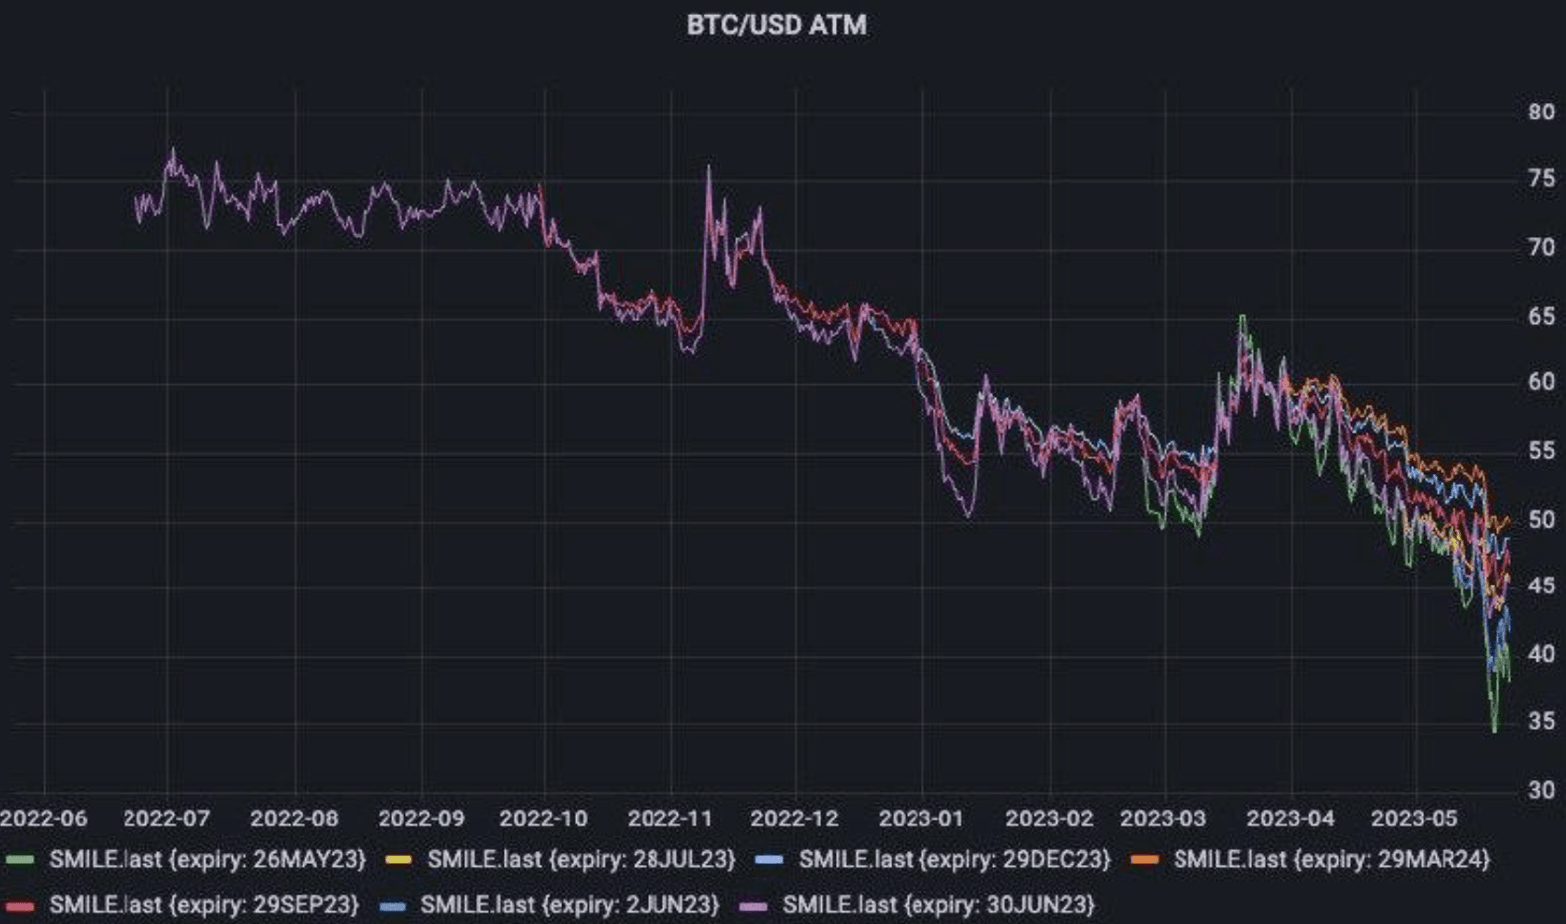 Chart 2: BTC / USD ATM